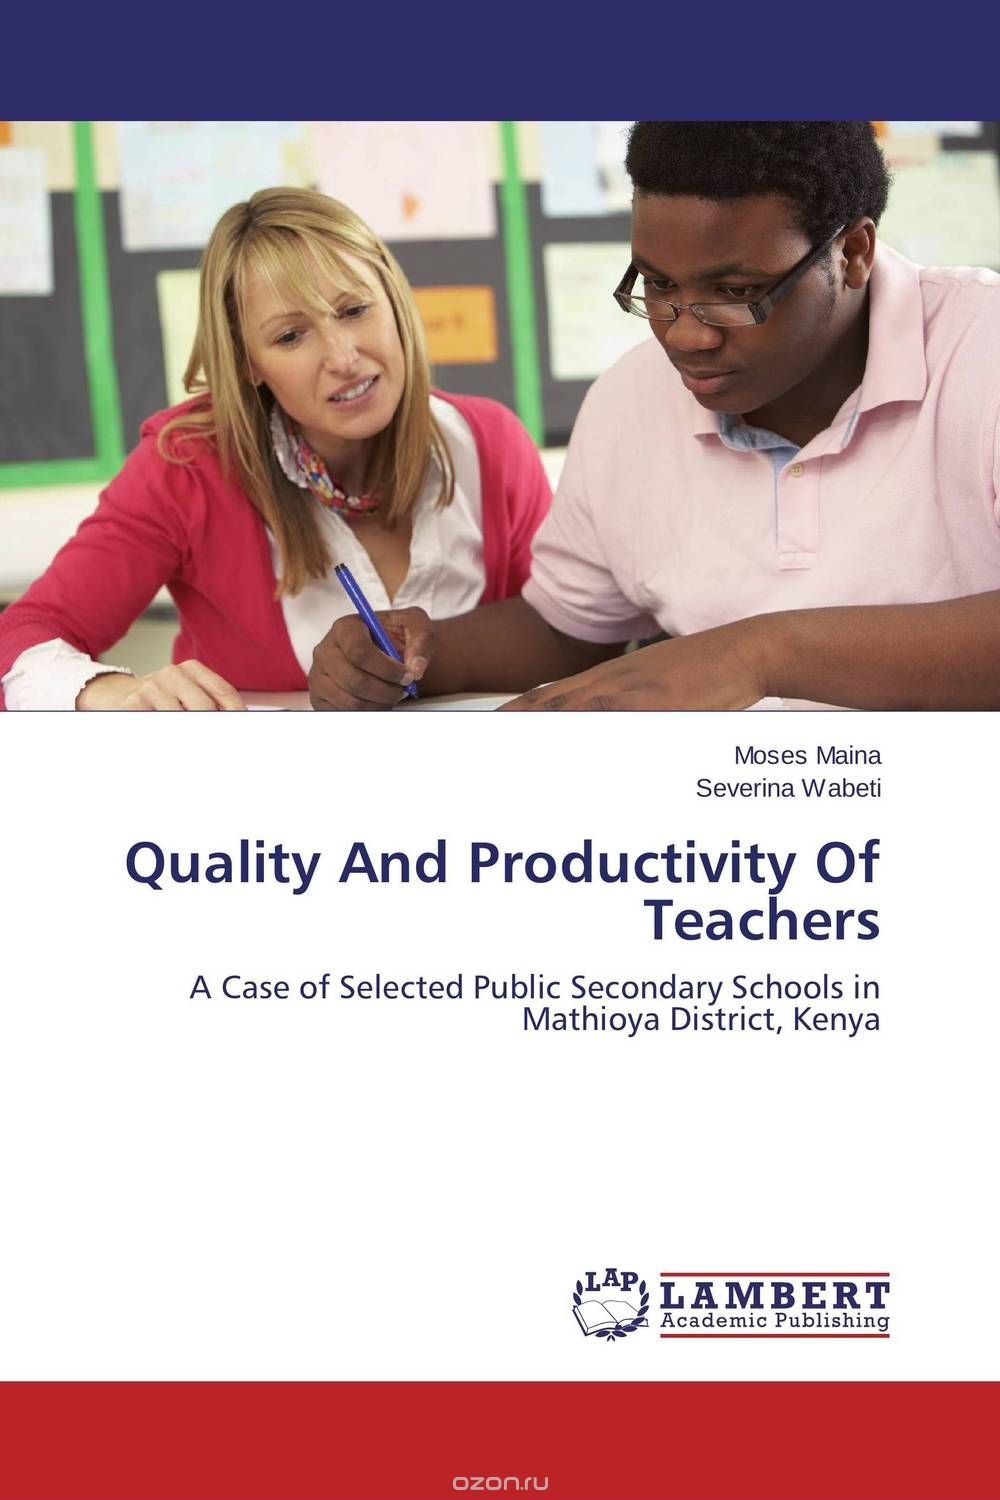 Скачать книгу "Quality And Productivity Of Teachers"